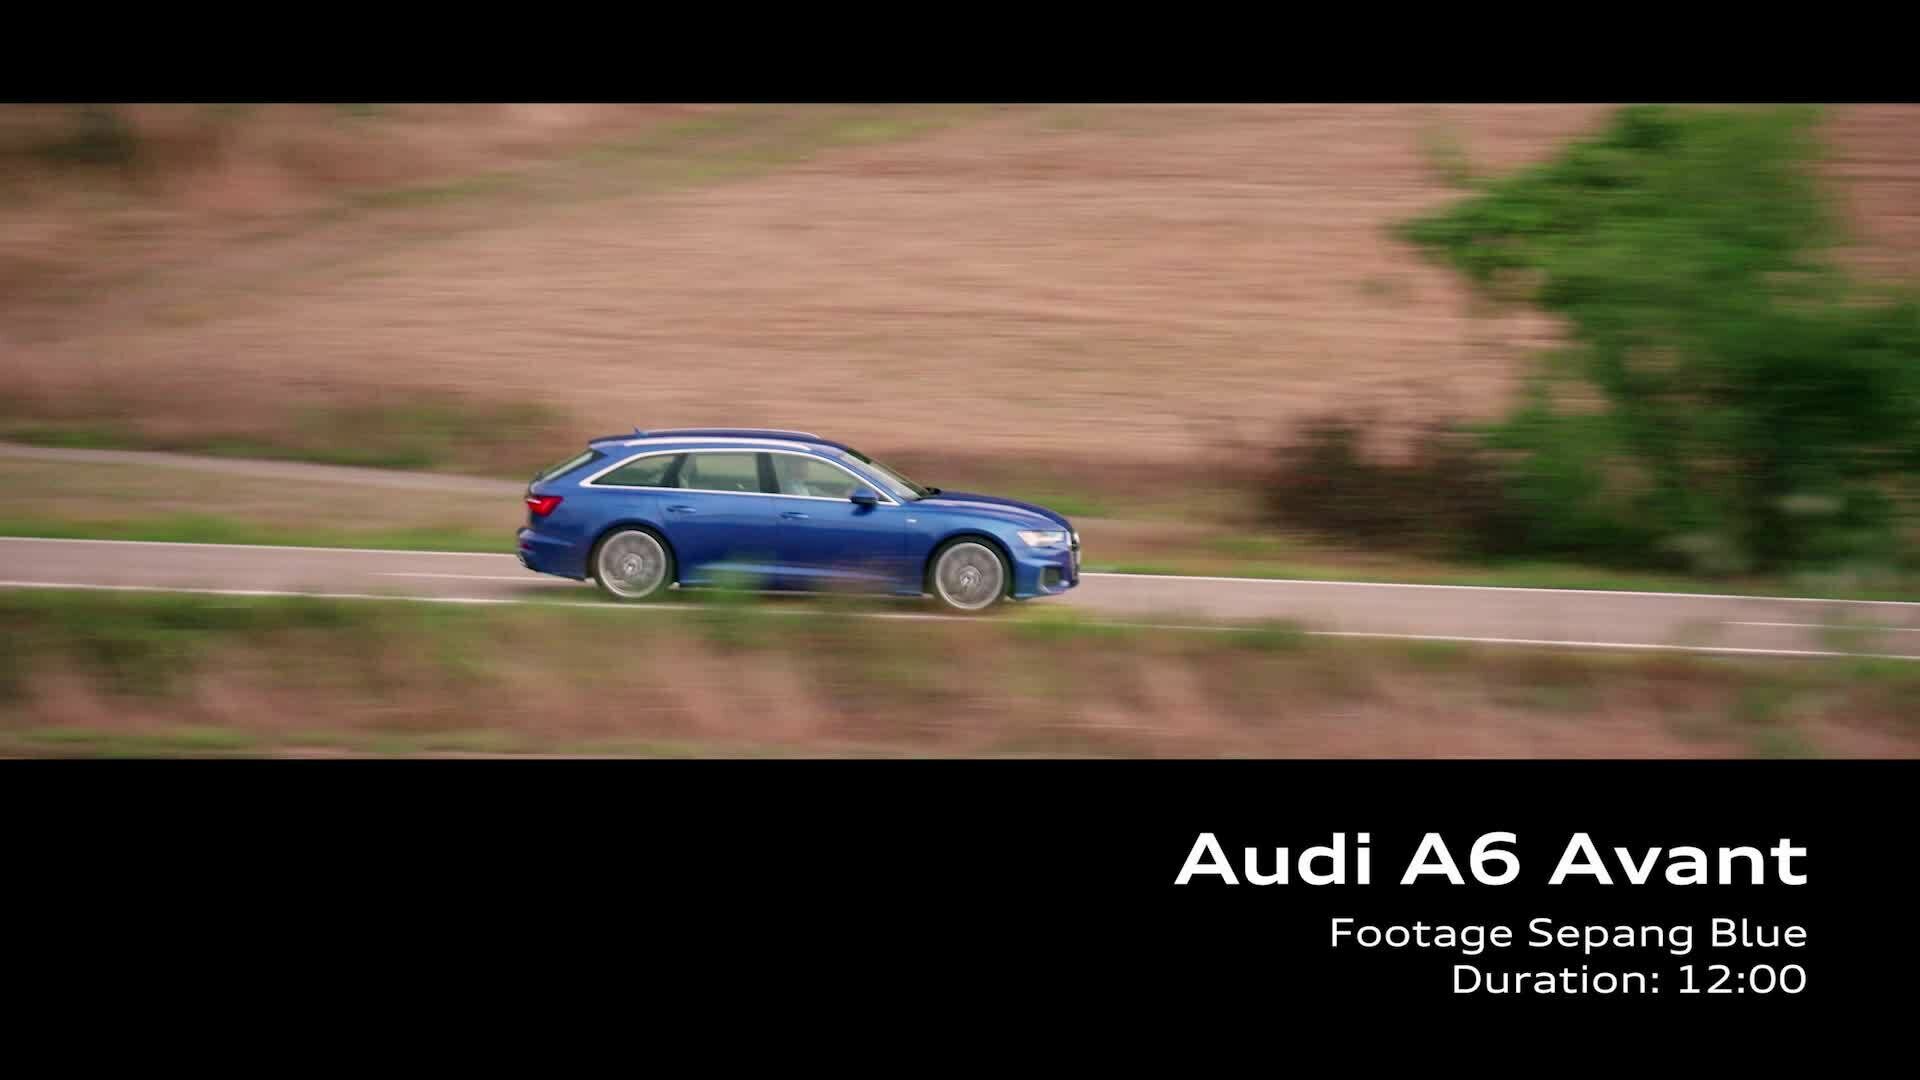 Audi A6 Avant – on Location Footage Sepang Blue